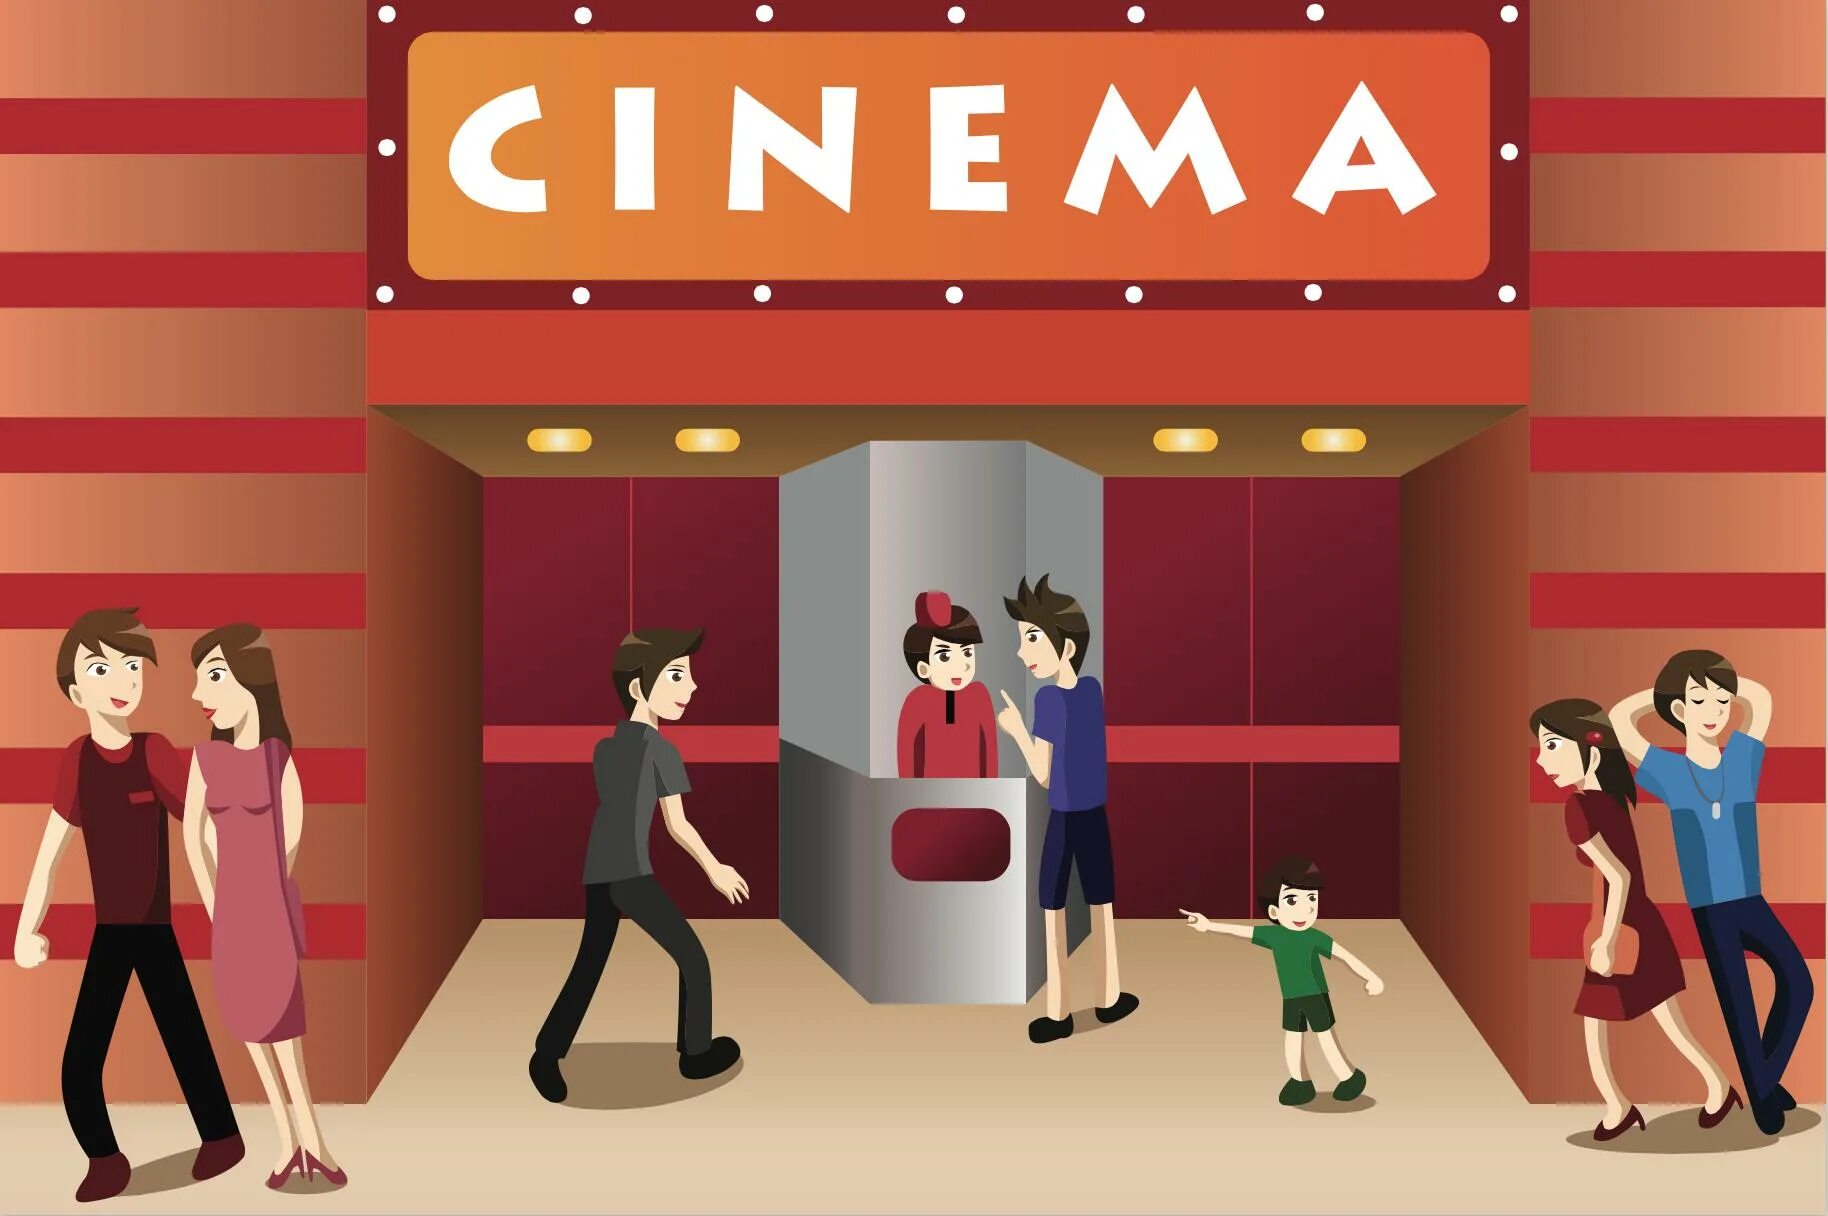 They like going to the cinema. Cinema картина для детей. Кинотеатр рисунок. Дети идут в кинотеатр рисунок. Нарисовать кинотеатр.